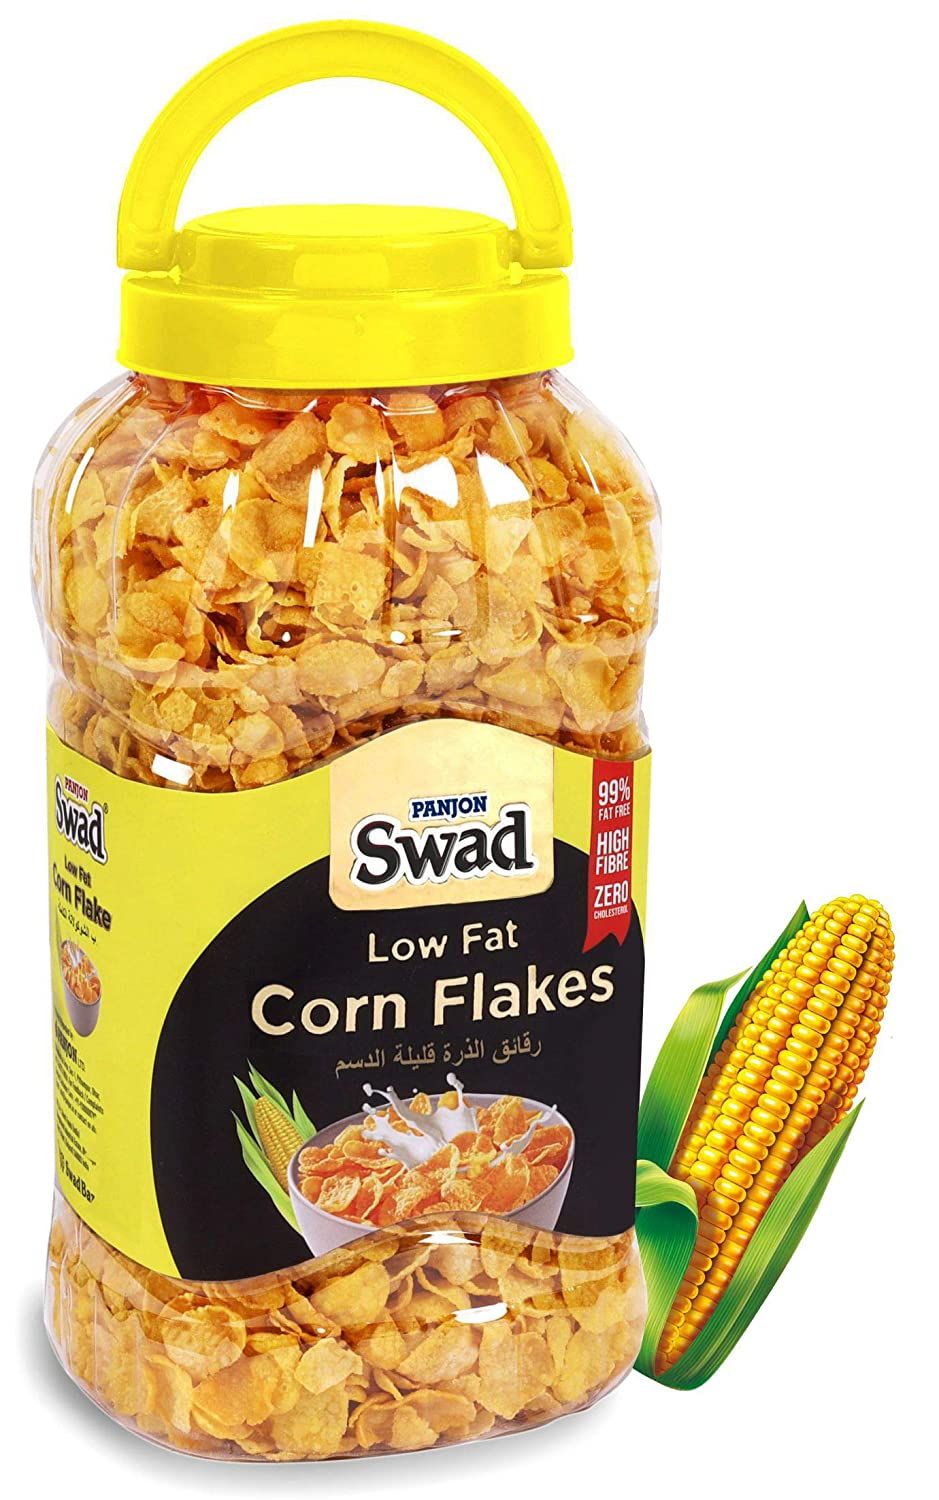 Swad Low Fat Corn Flakes Image